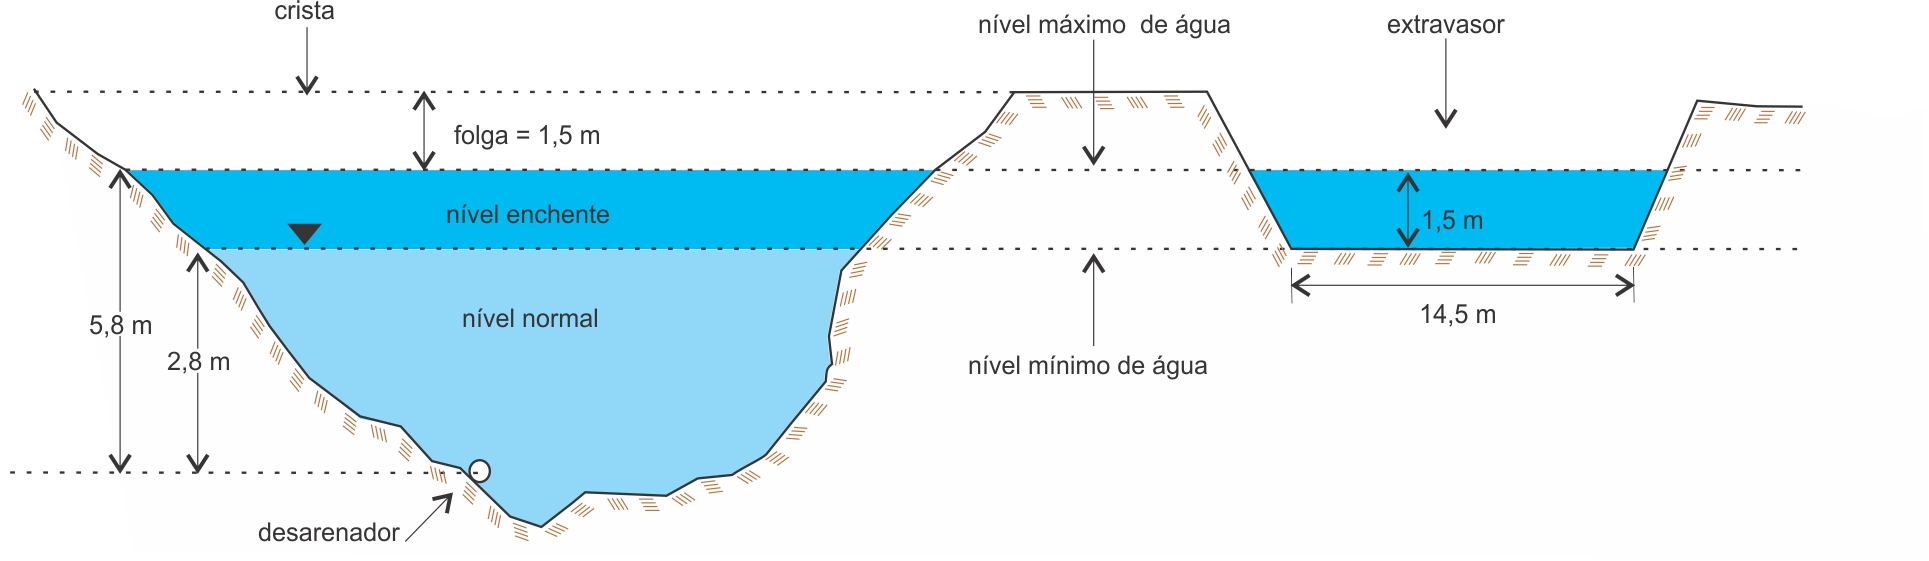 Figura 12 – Perfil longitudinal da barragem